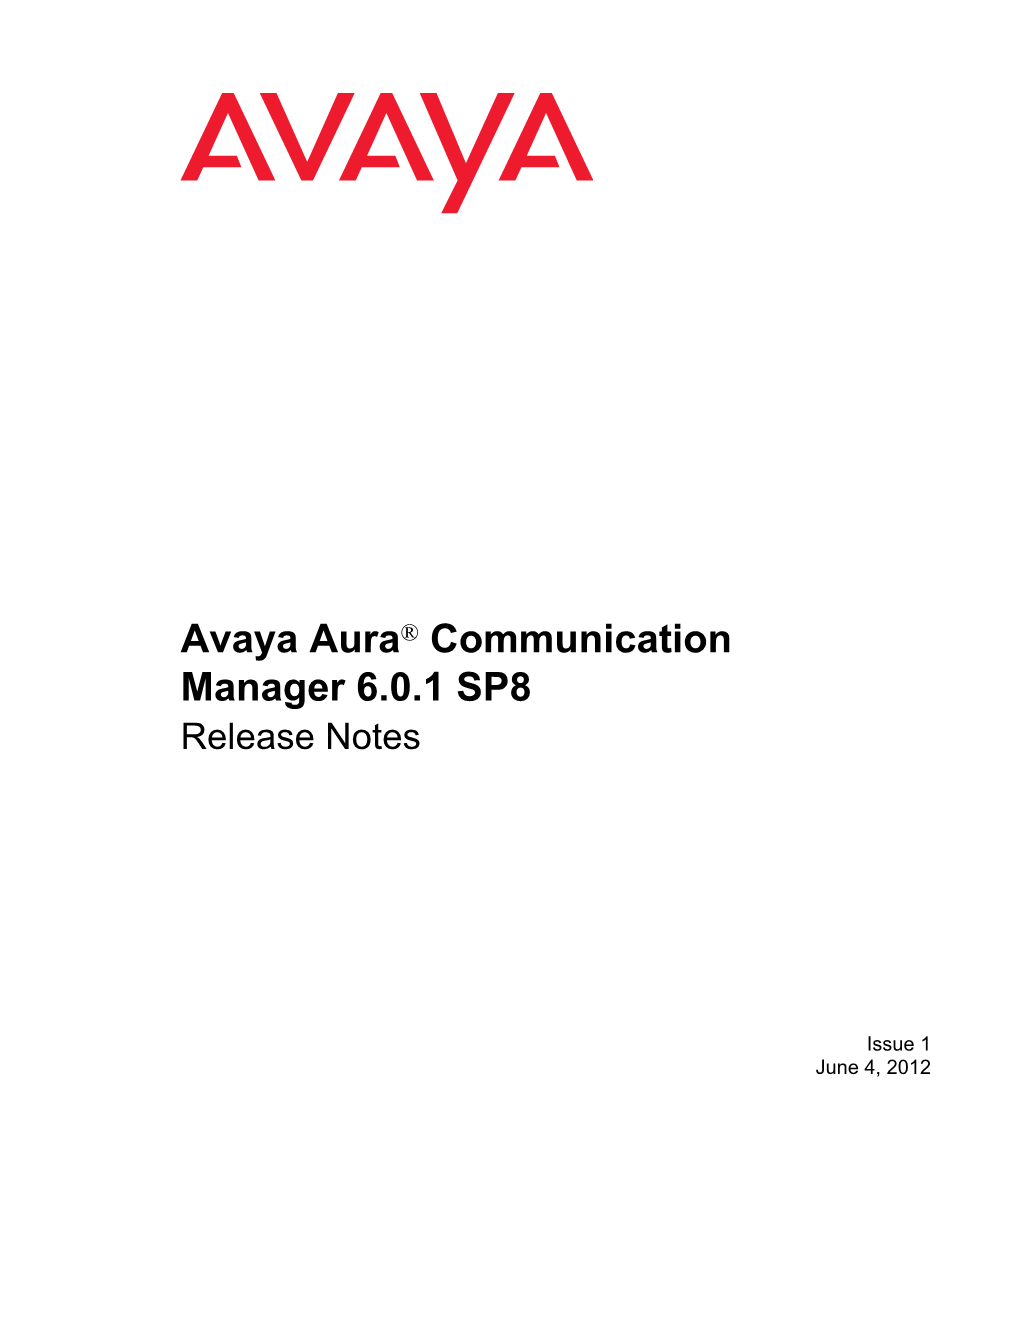 Avaya Aura® Communication Manager 6.0.1 SP8 Release Notes